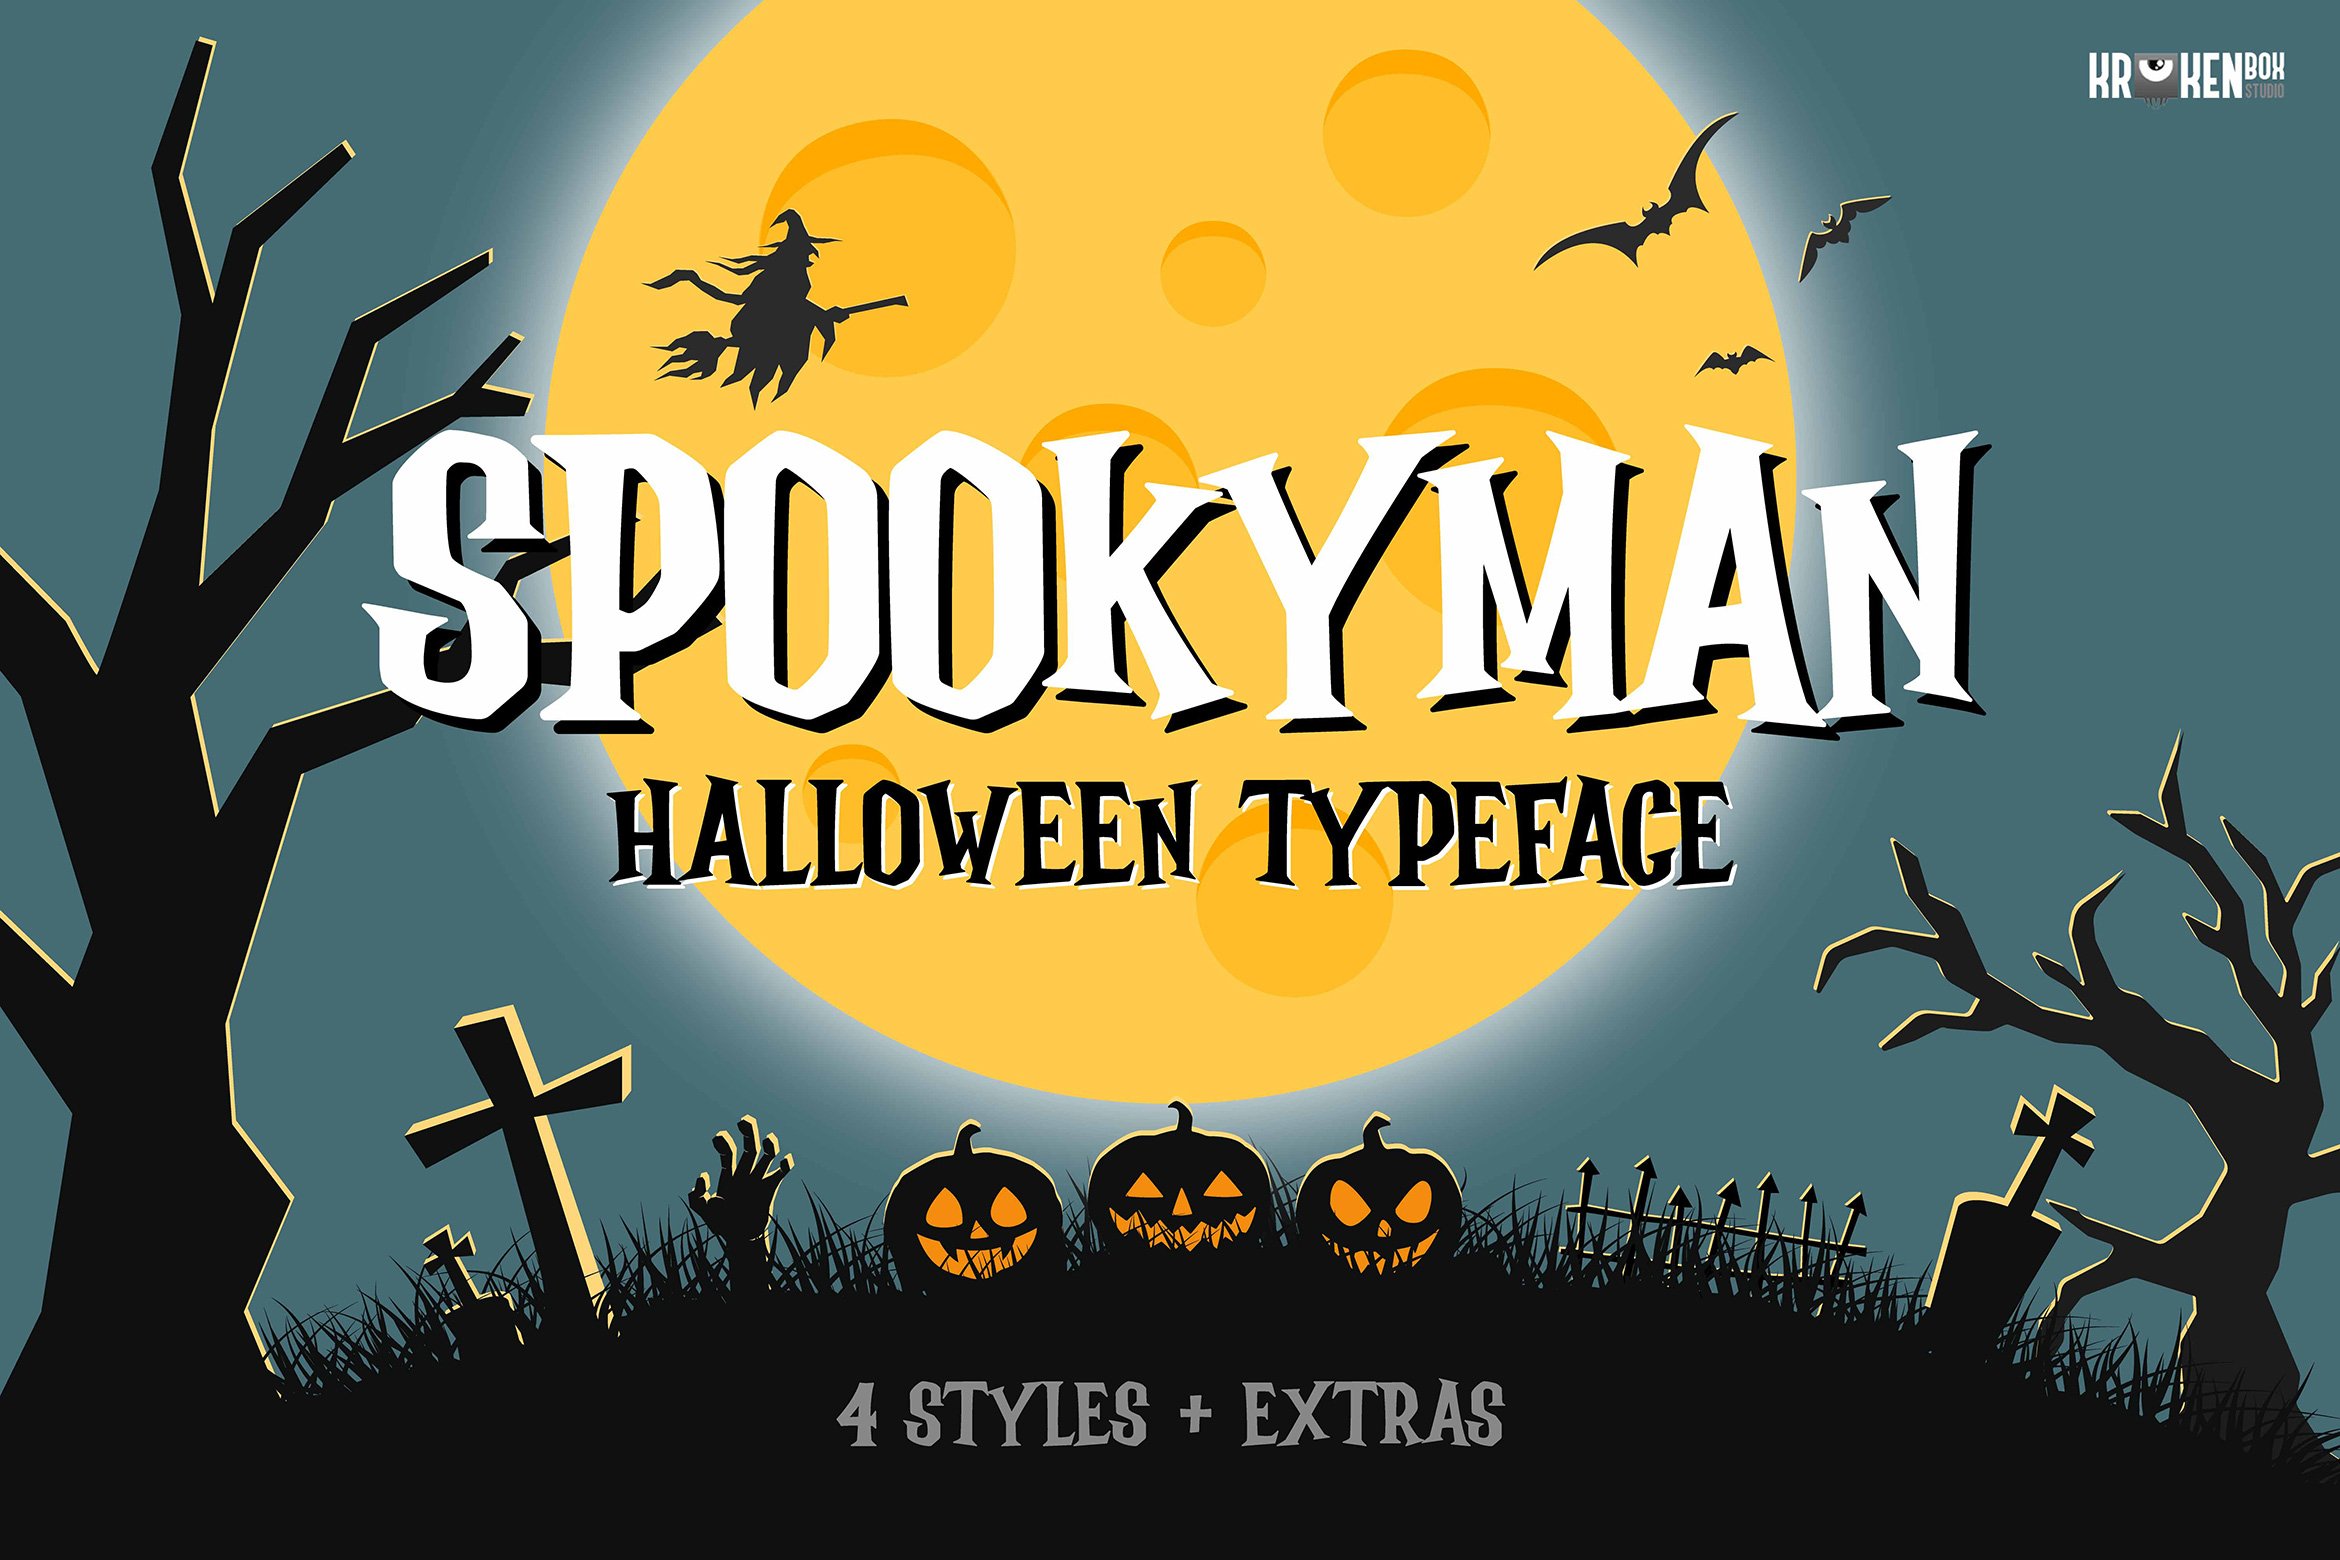 Spookyman - Halloween + Extras cover image.